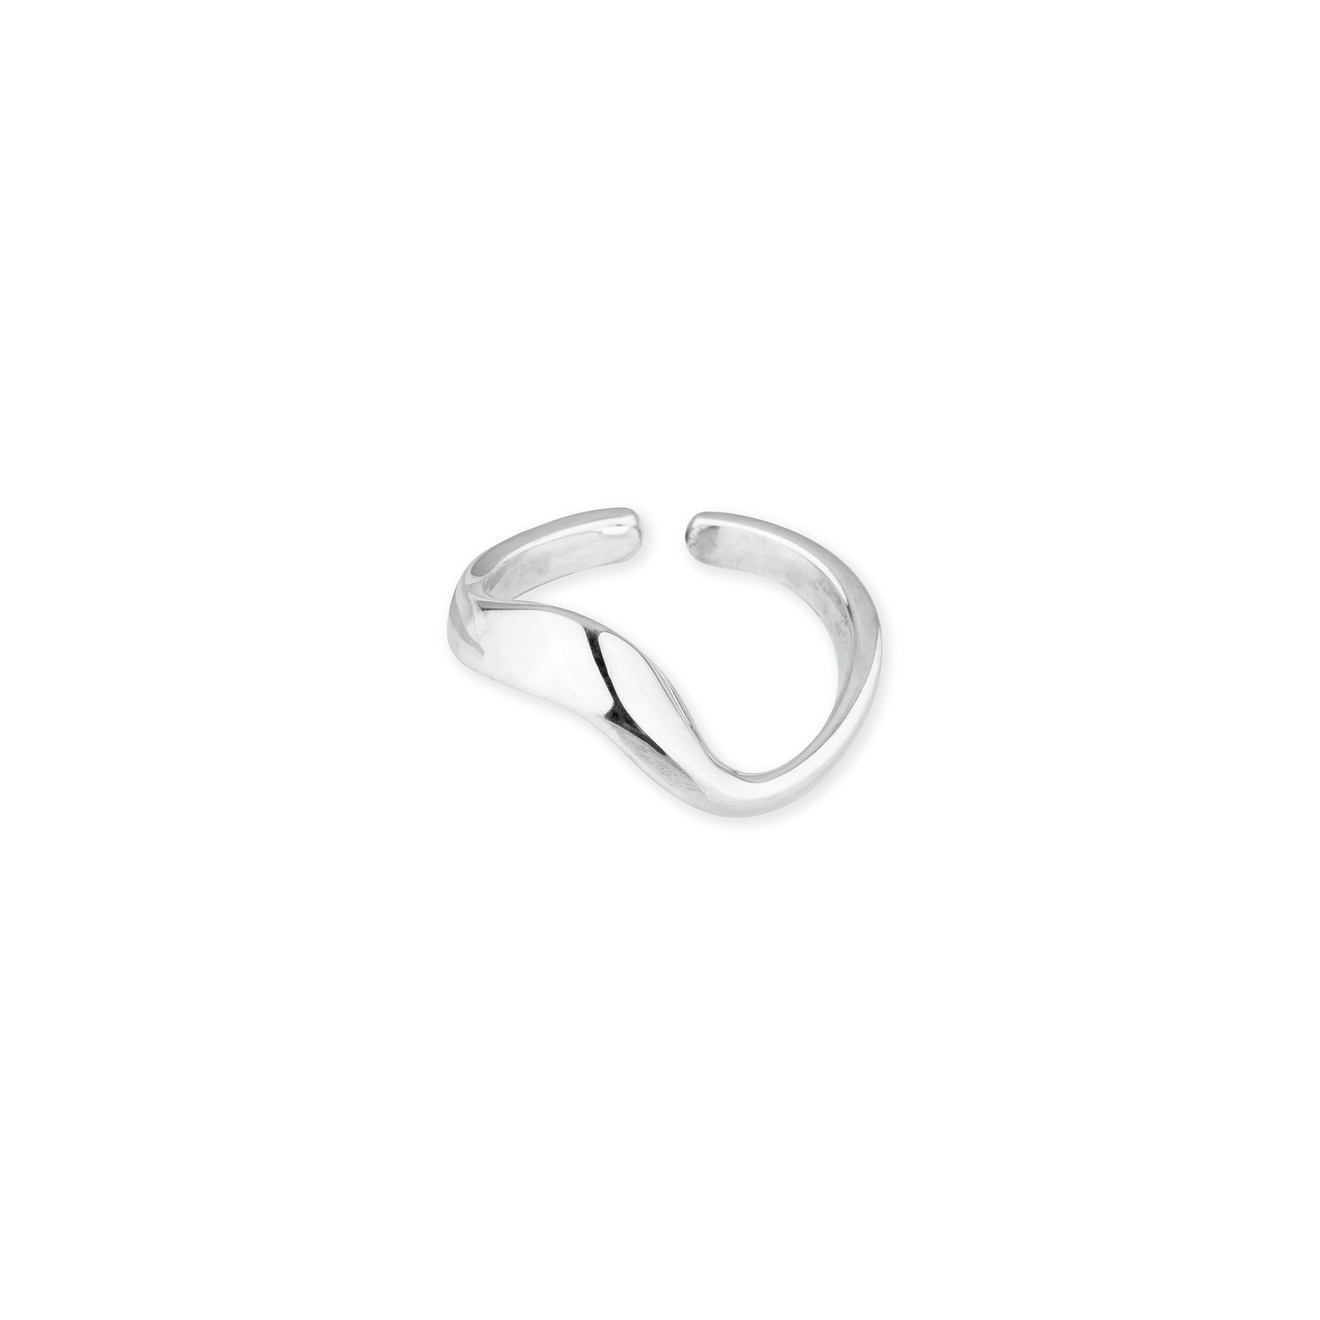 Philippe Audibert Кольцо Clea ring bress с серебряным покрытием philippe audibert кольцо neal ring с серебряным покрытием